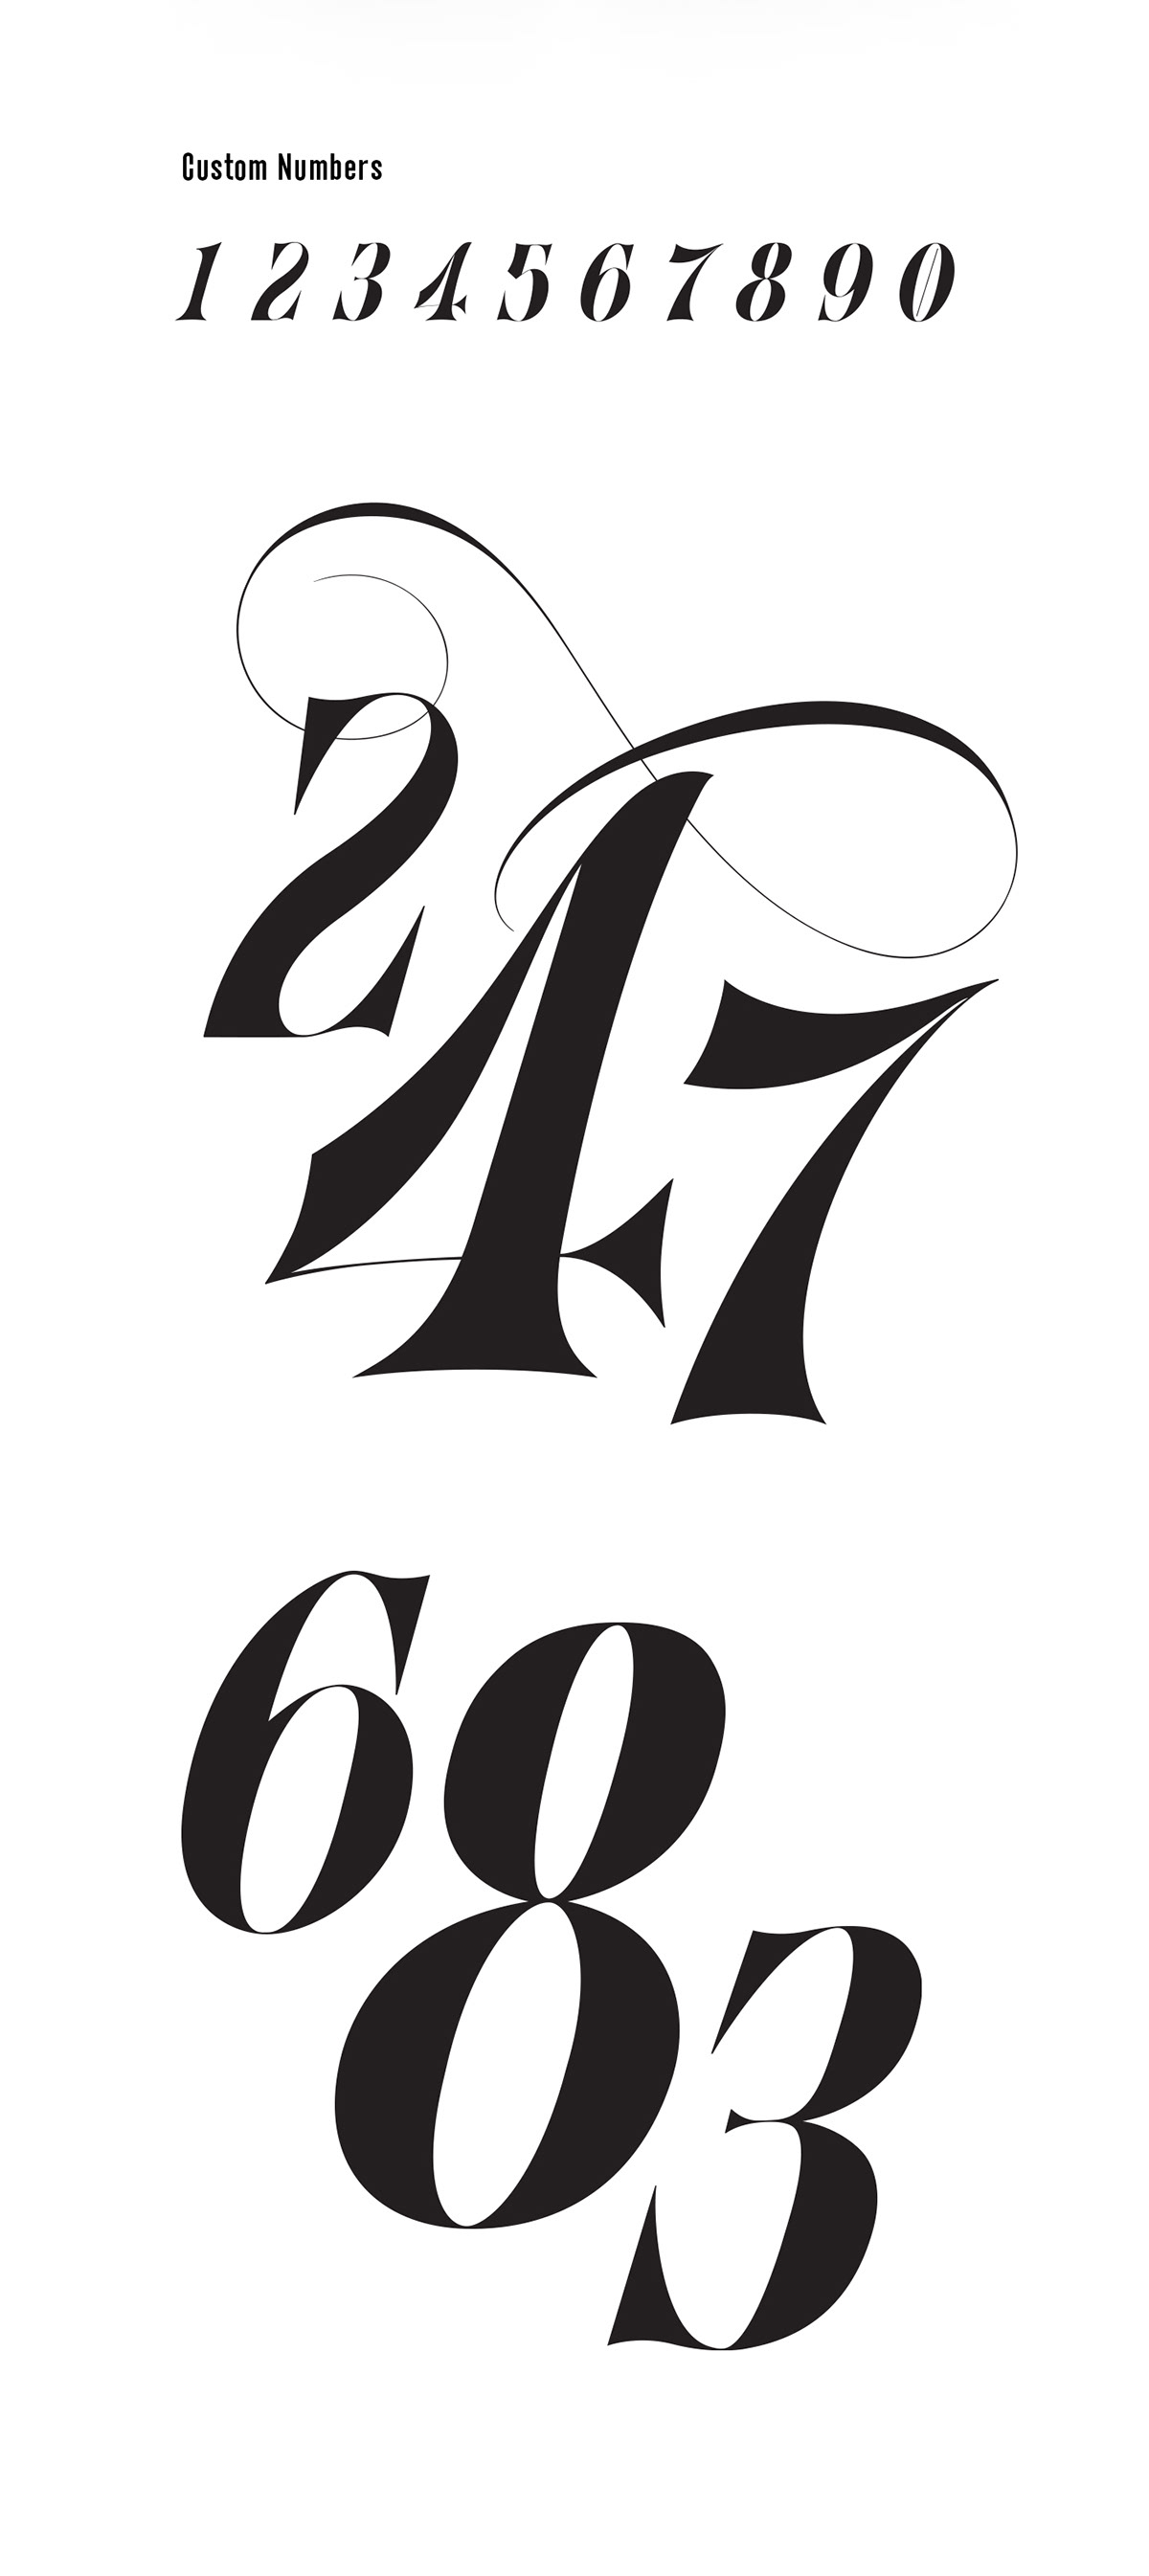 editorial Food  Logotype magazine numbers serif type design TYPOGRPAHY Washington